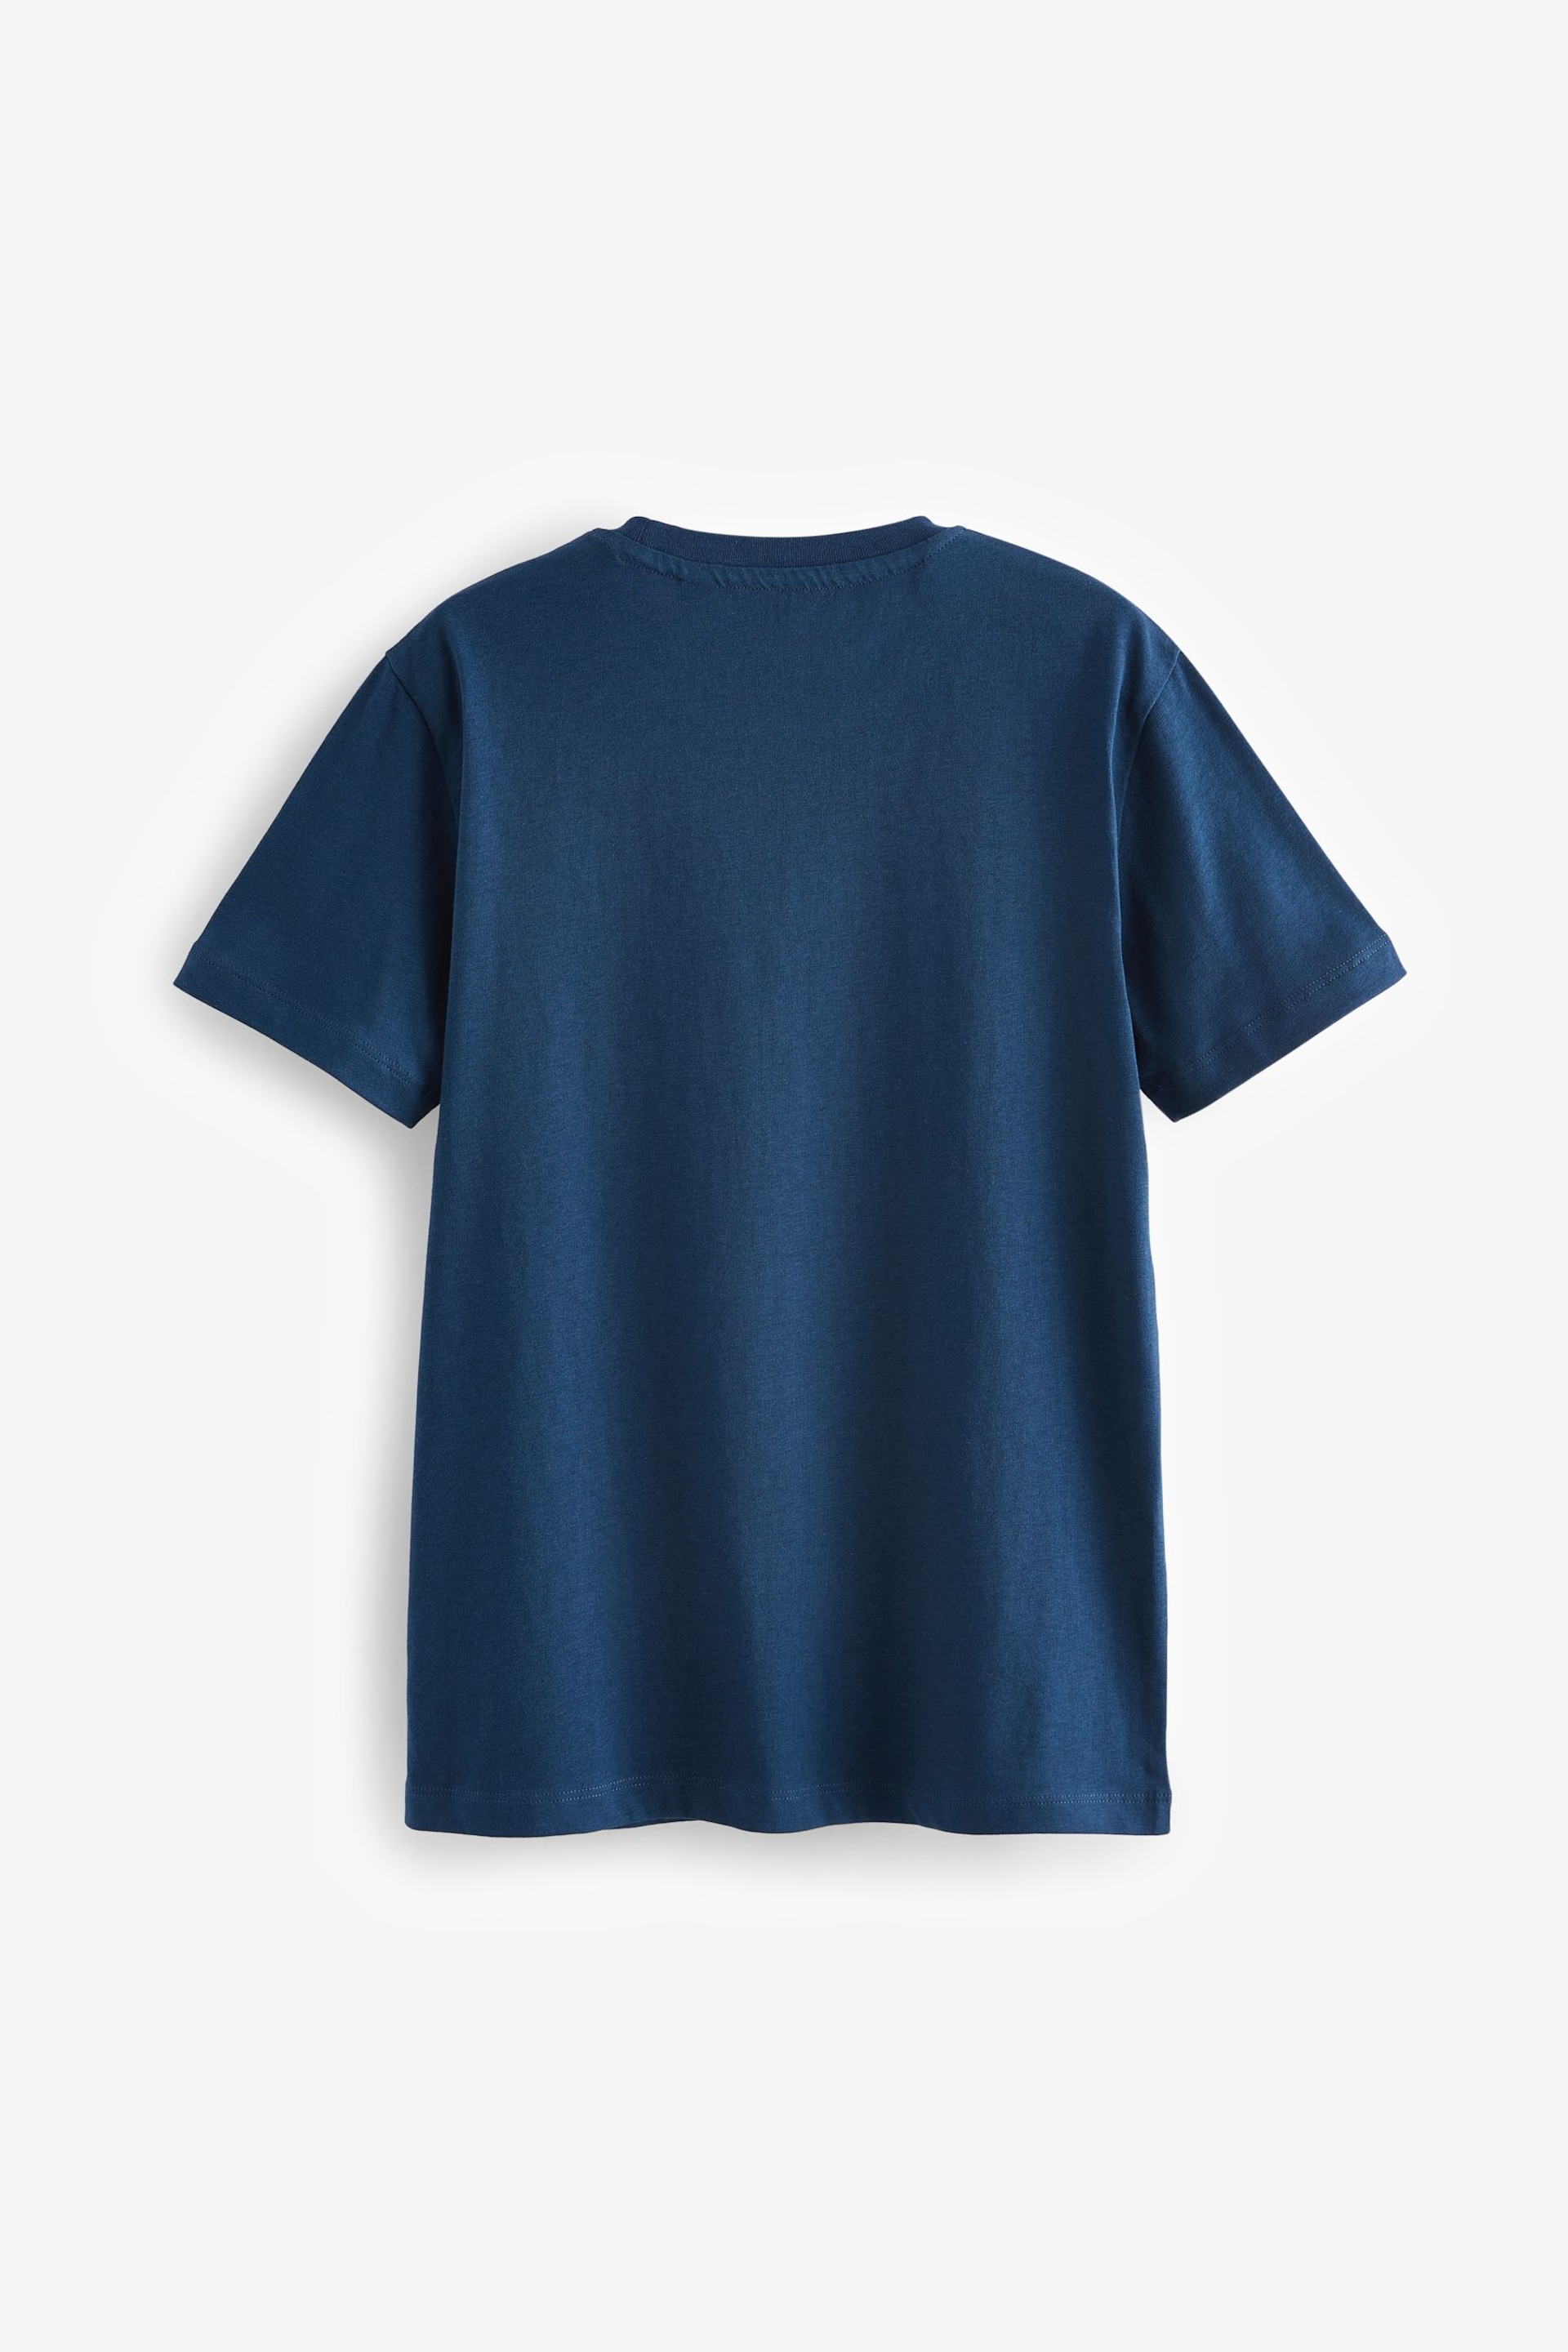 smALLSAINTS Blue Boys Brace Crew 3 Pack T-Shirts - Image 5 of 5